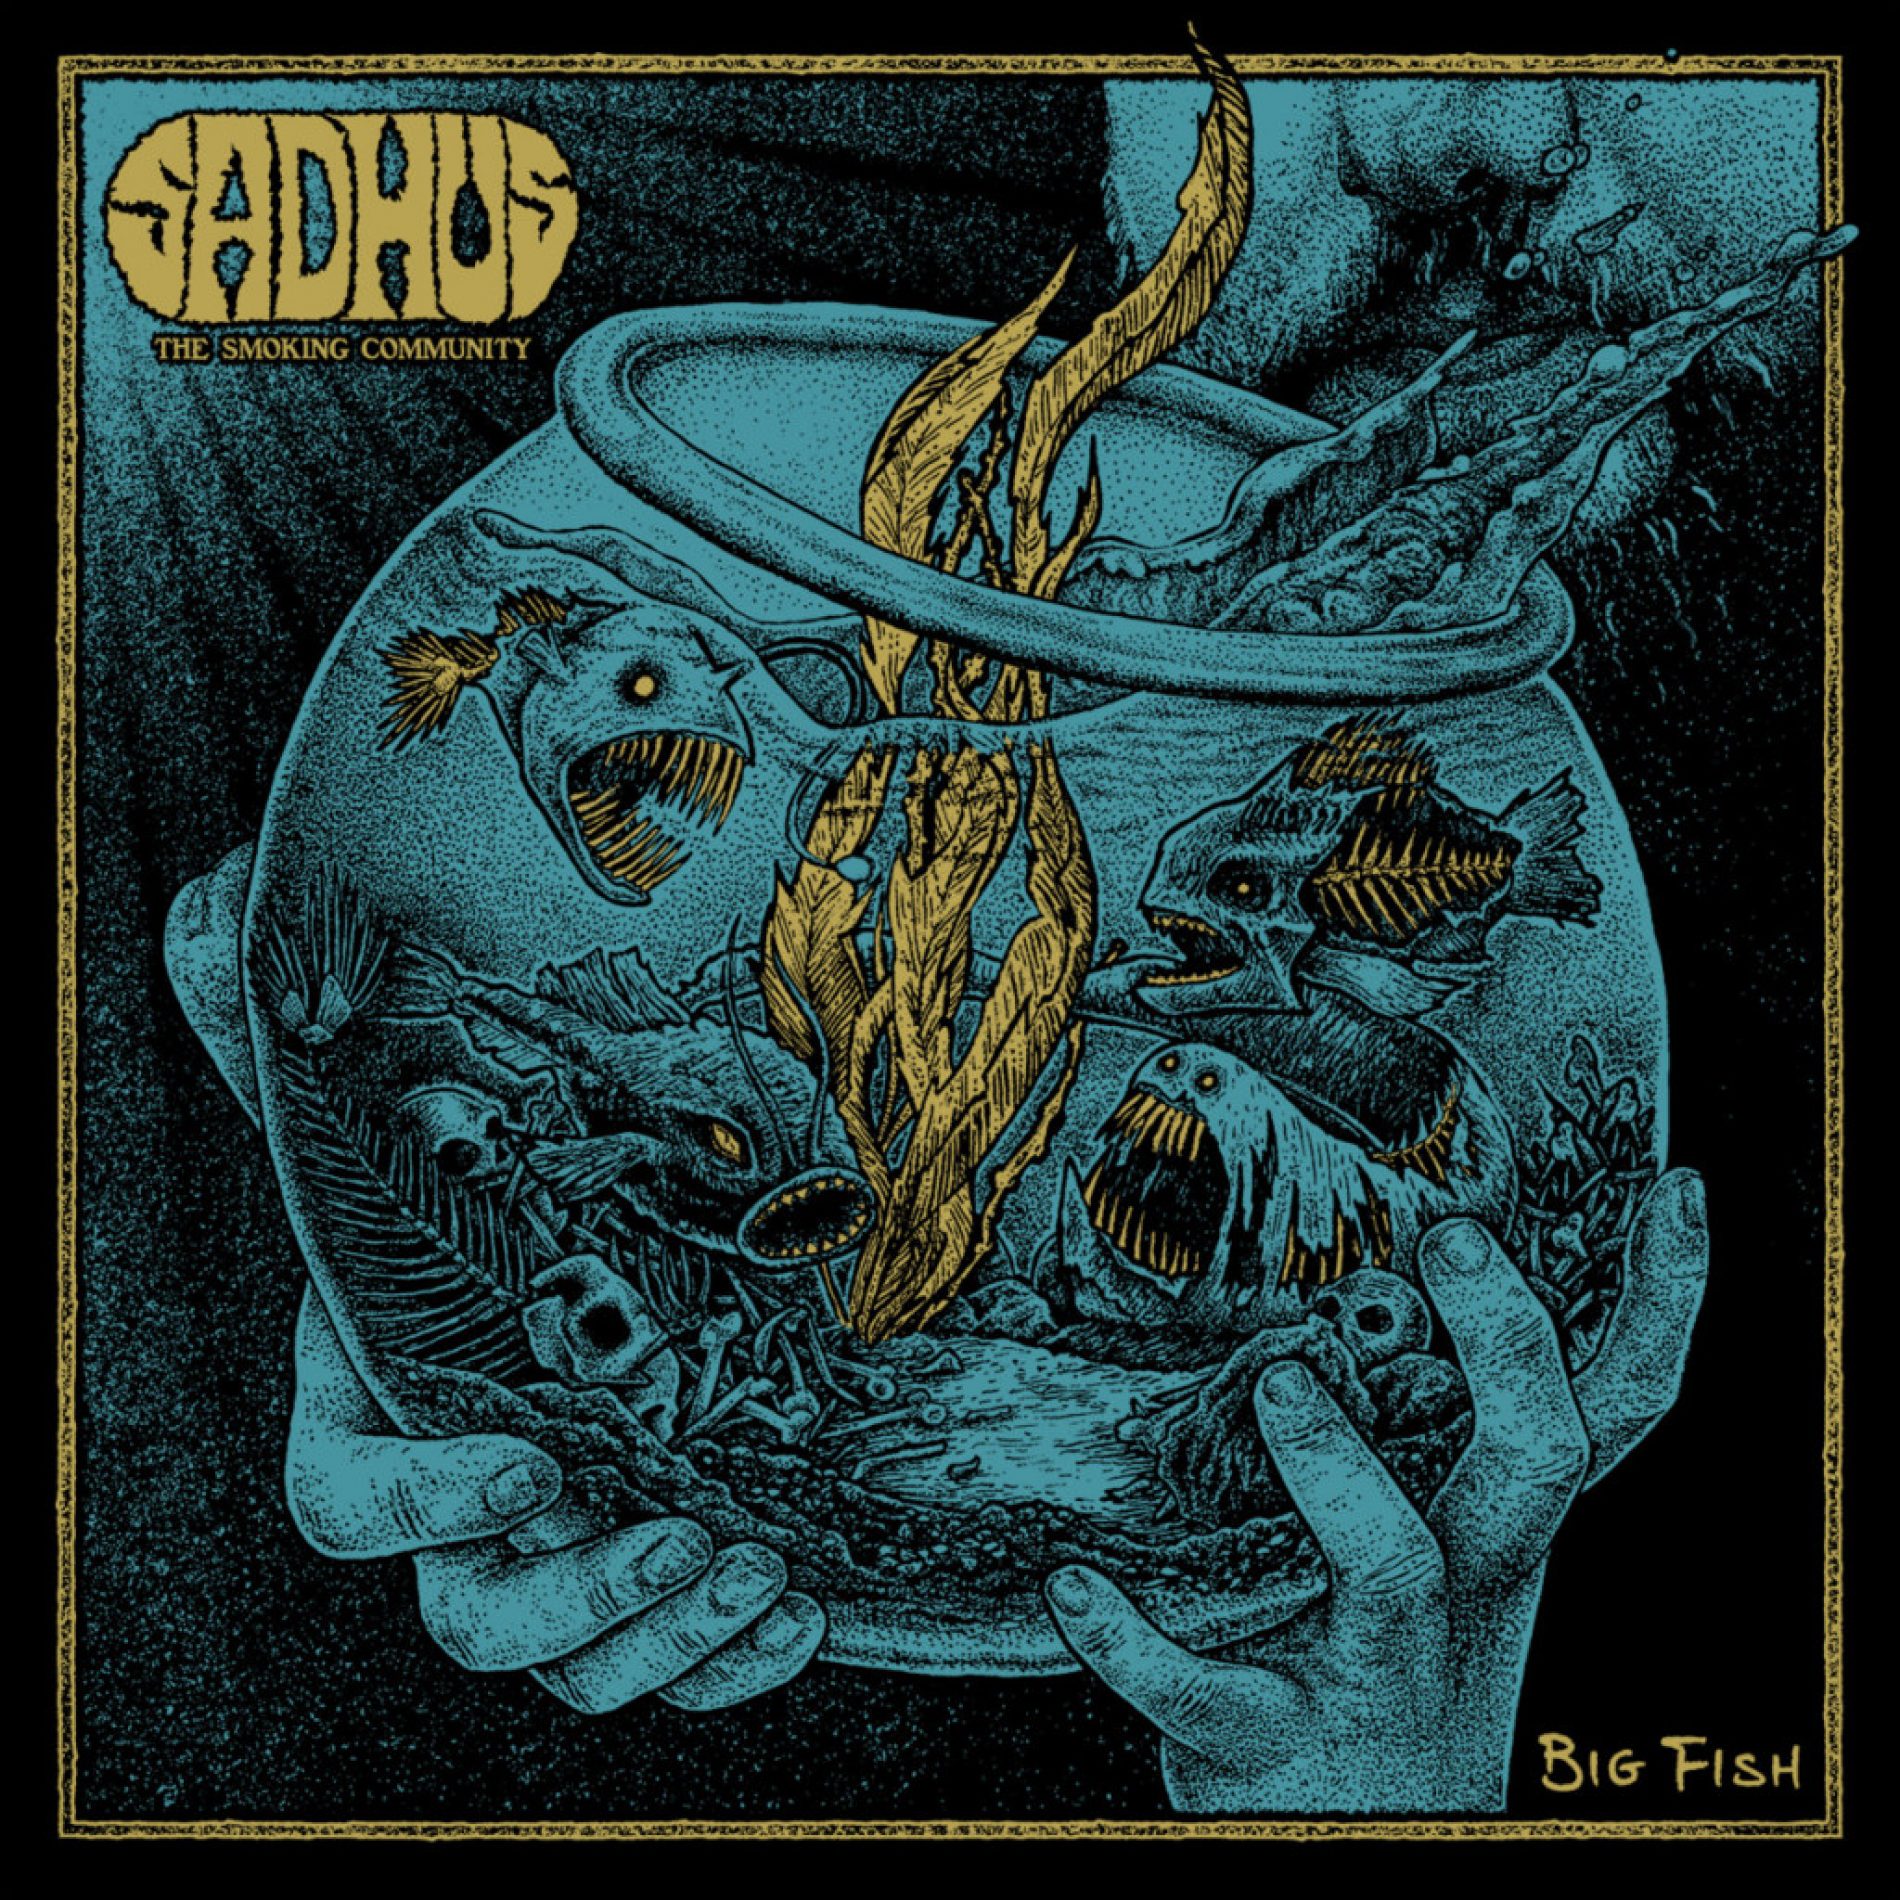 SADHUS “THE SMOKING COMMUNITY” & LAST RIZLA – NEW ALBUMS REVIEWS